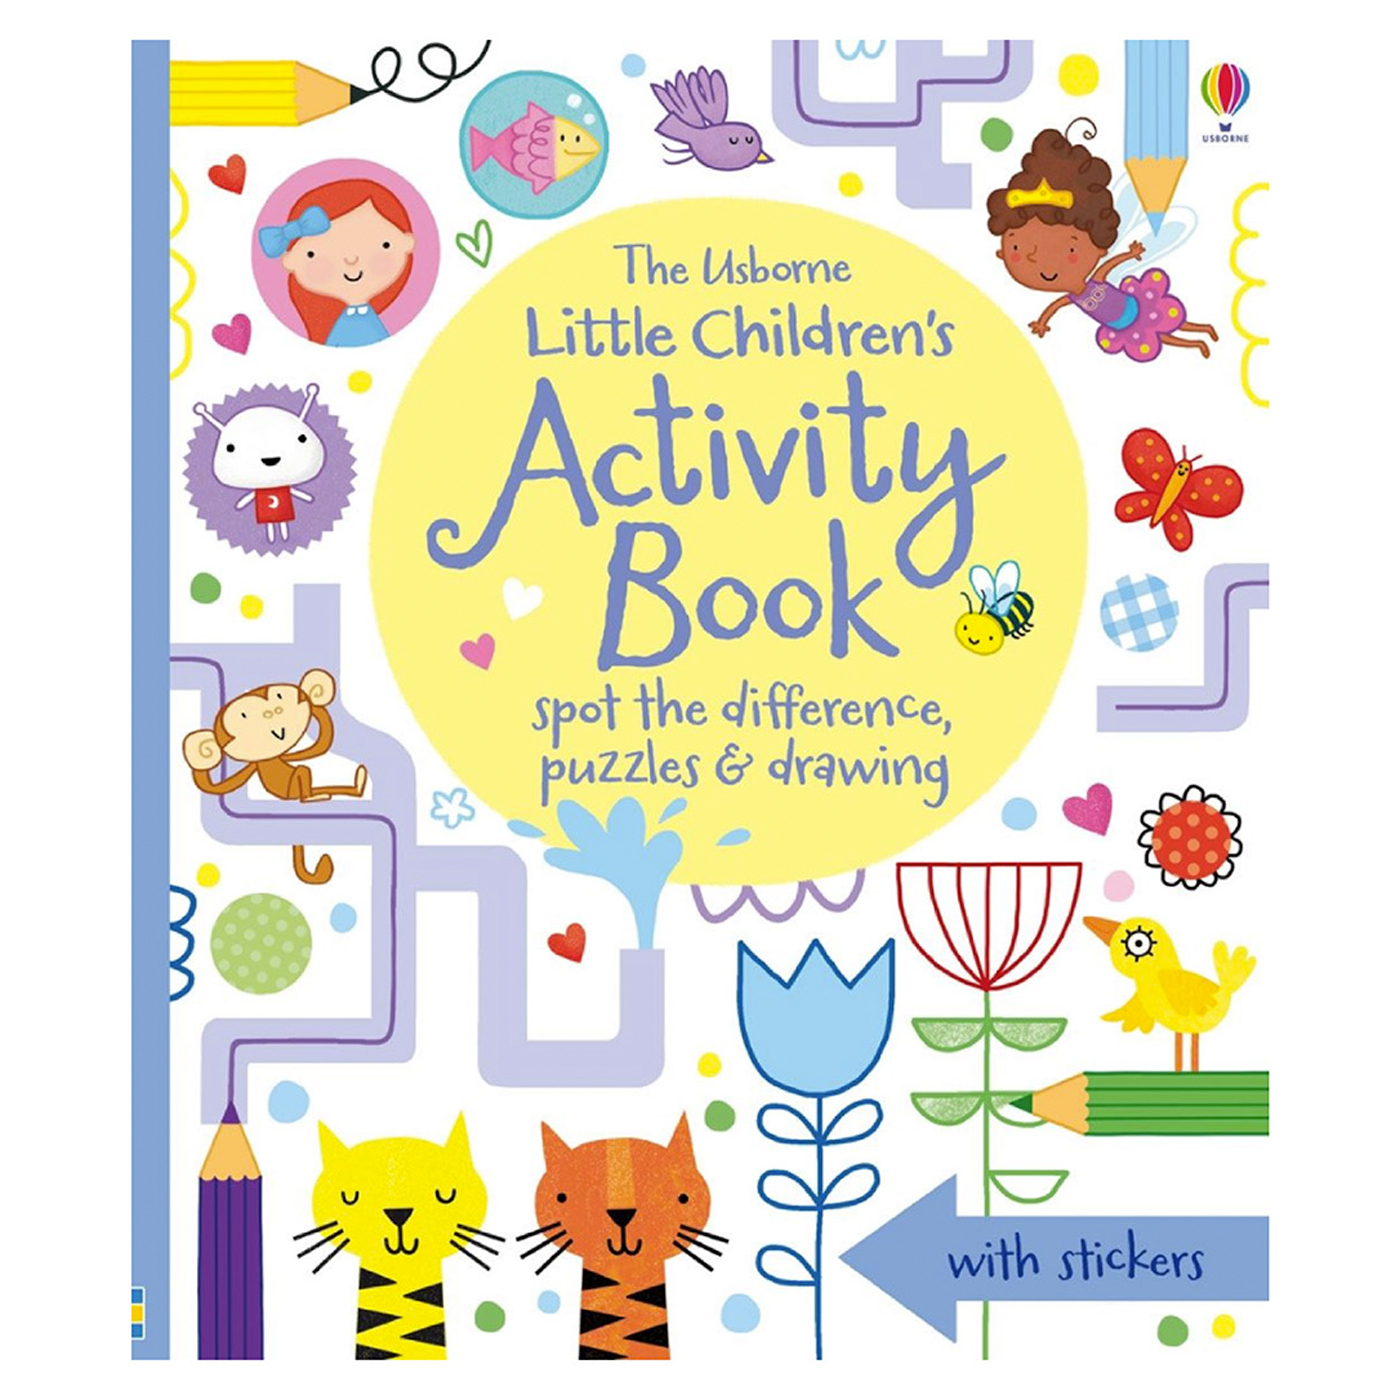  Little Children's Activity Book